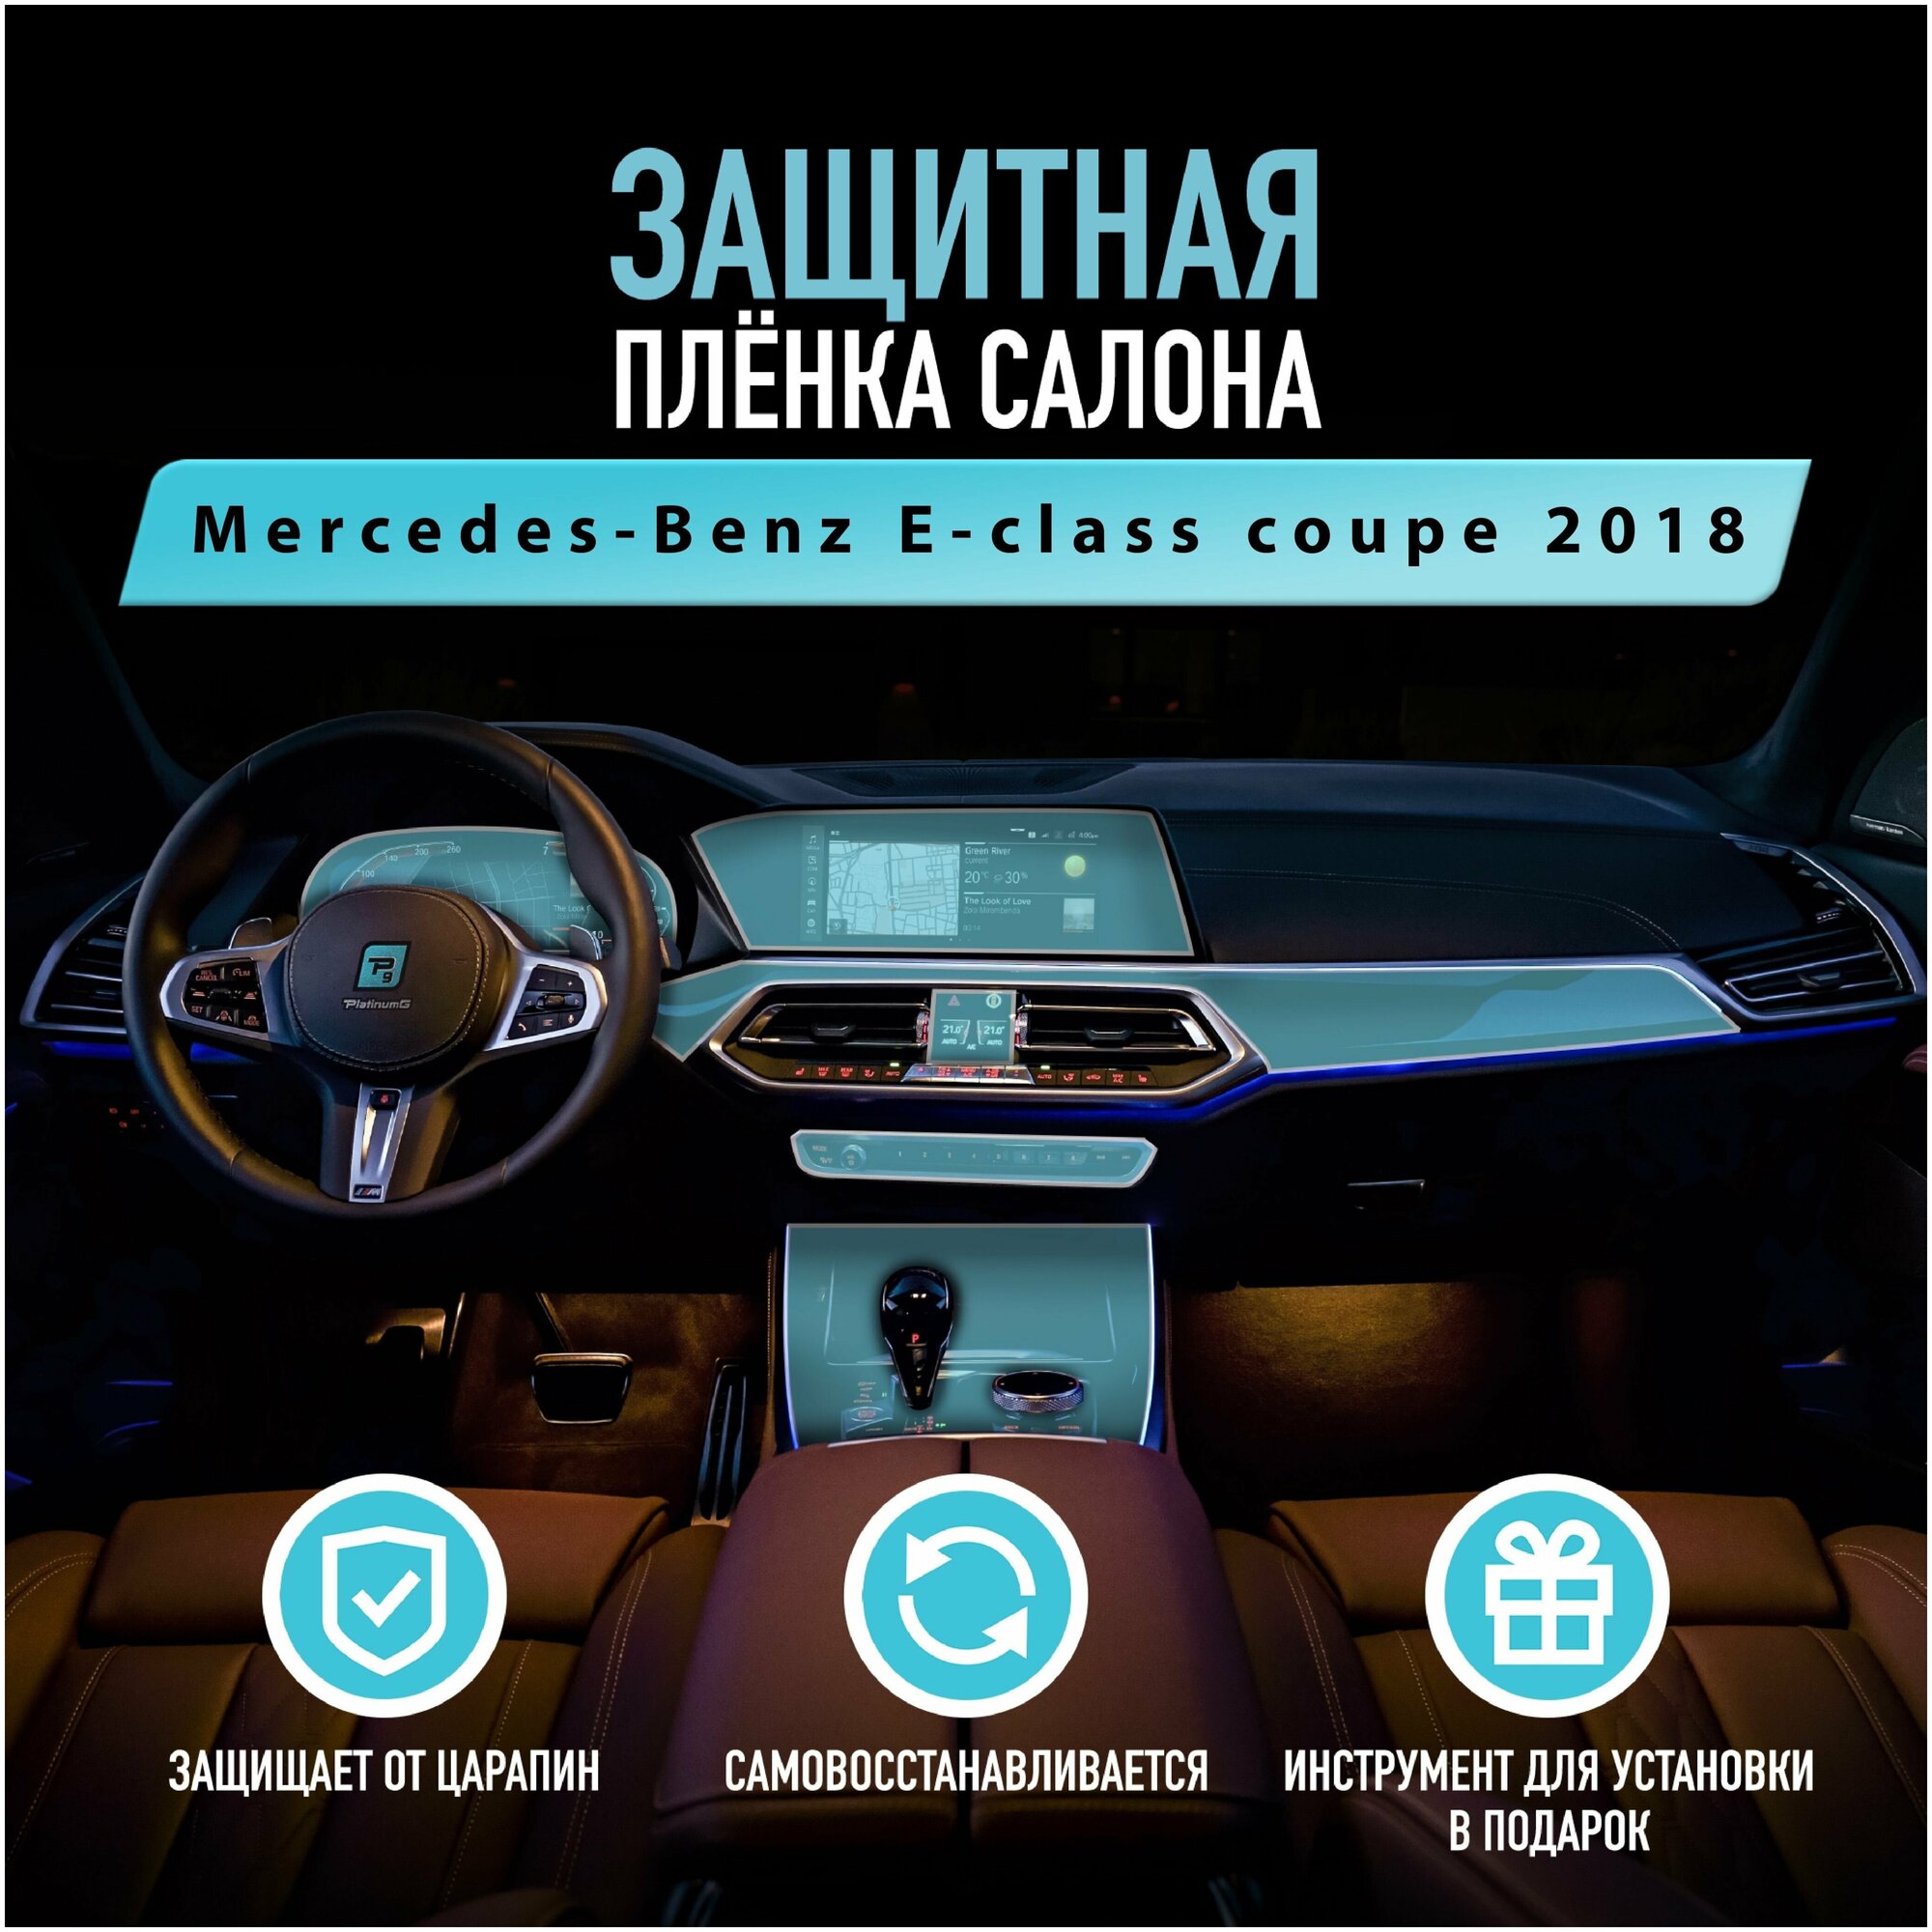 Защитная пленка для автомобиля Mercedes-Benz E-class coupe 2018 Мерседес, полиуретановая антигравийная пленка для салона, глянцевая